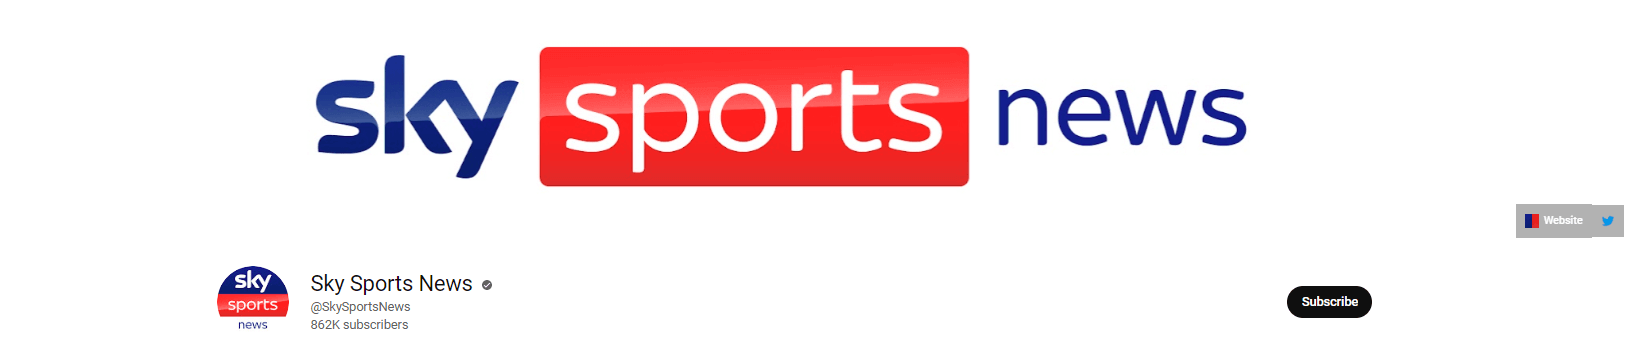 SkySportsNews